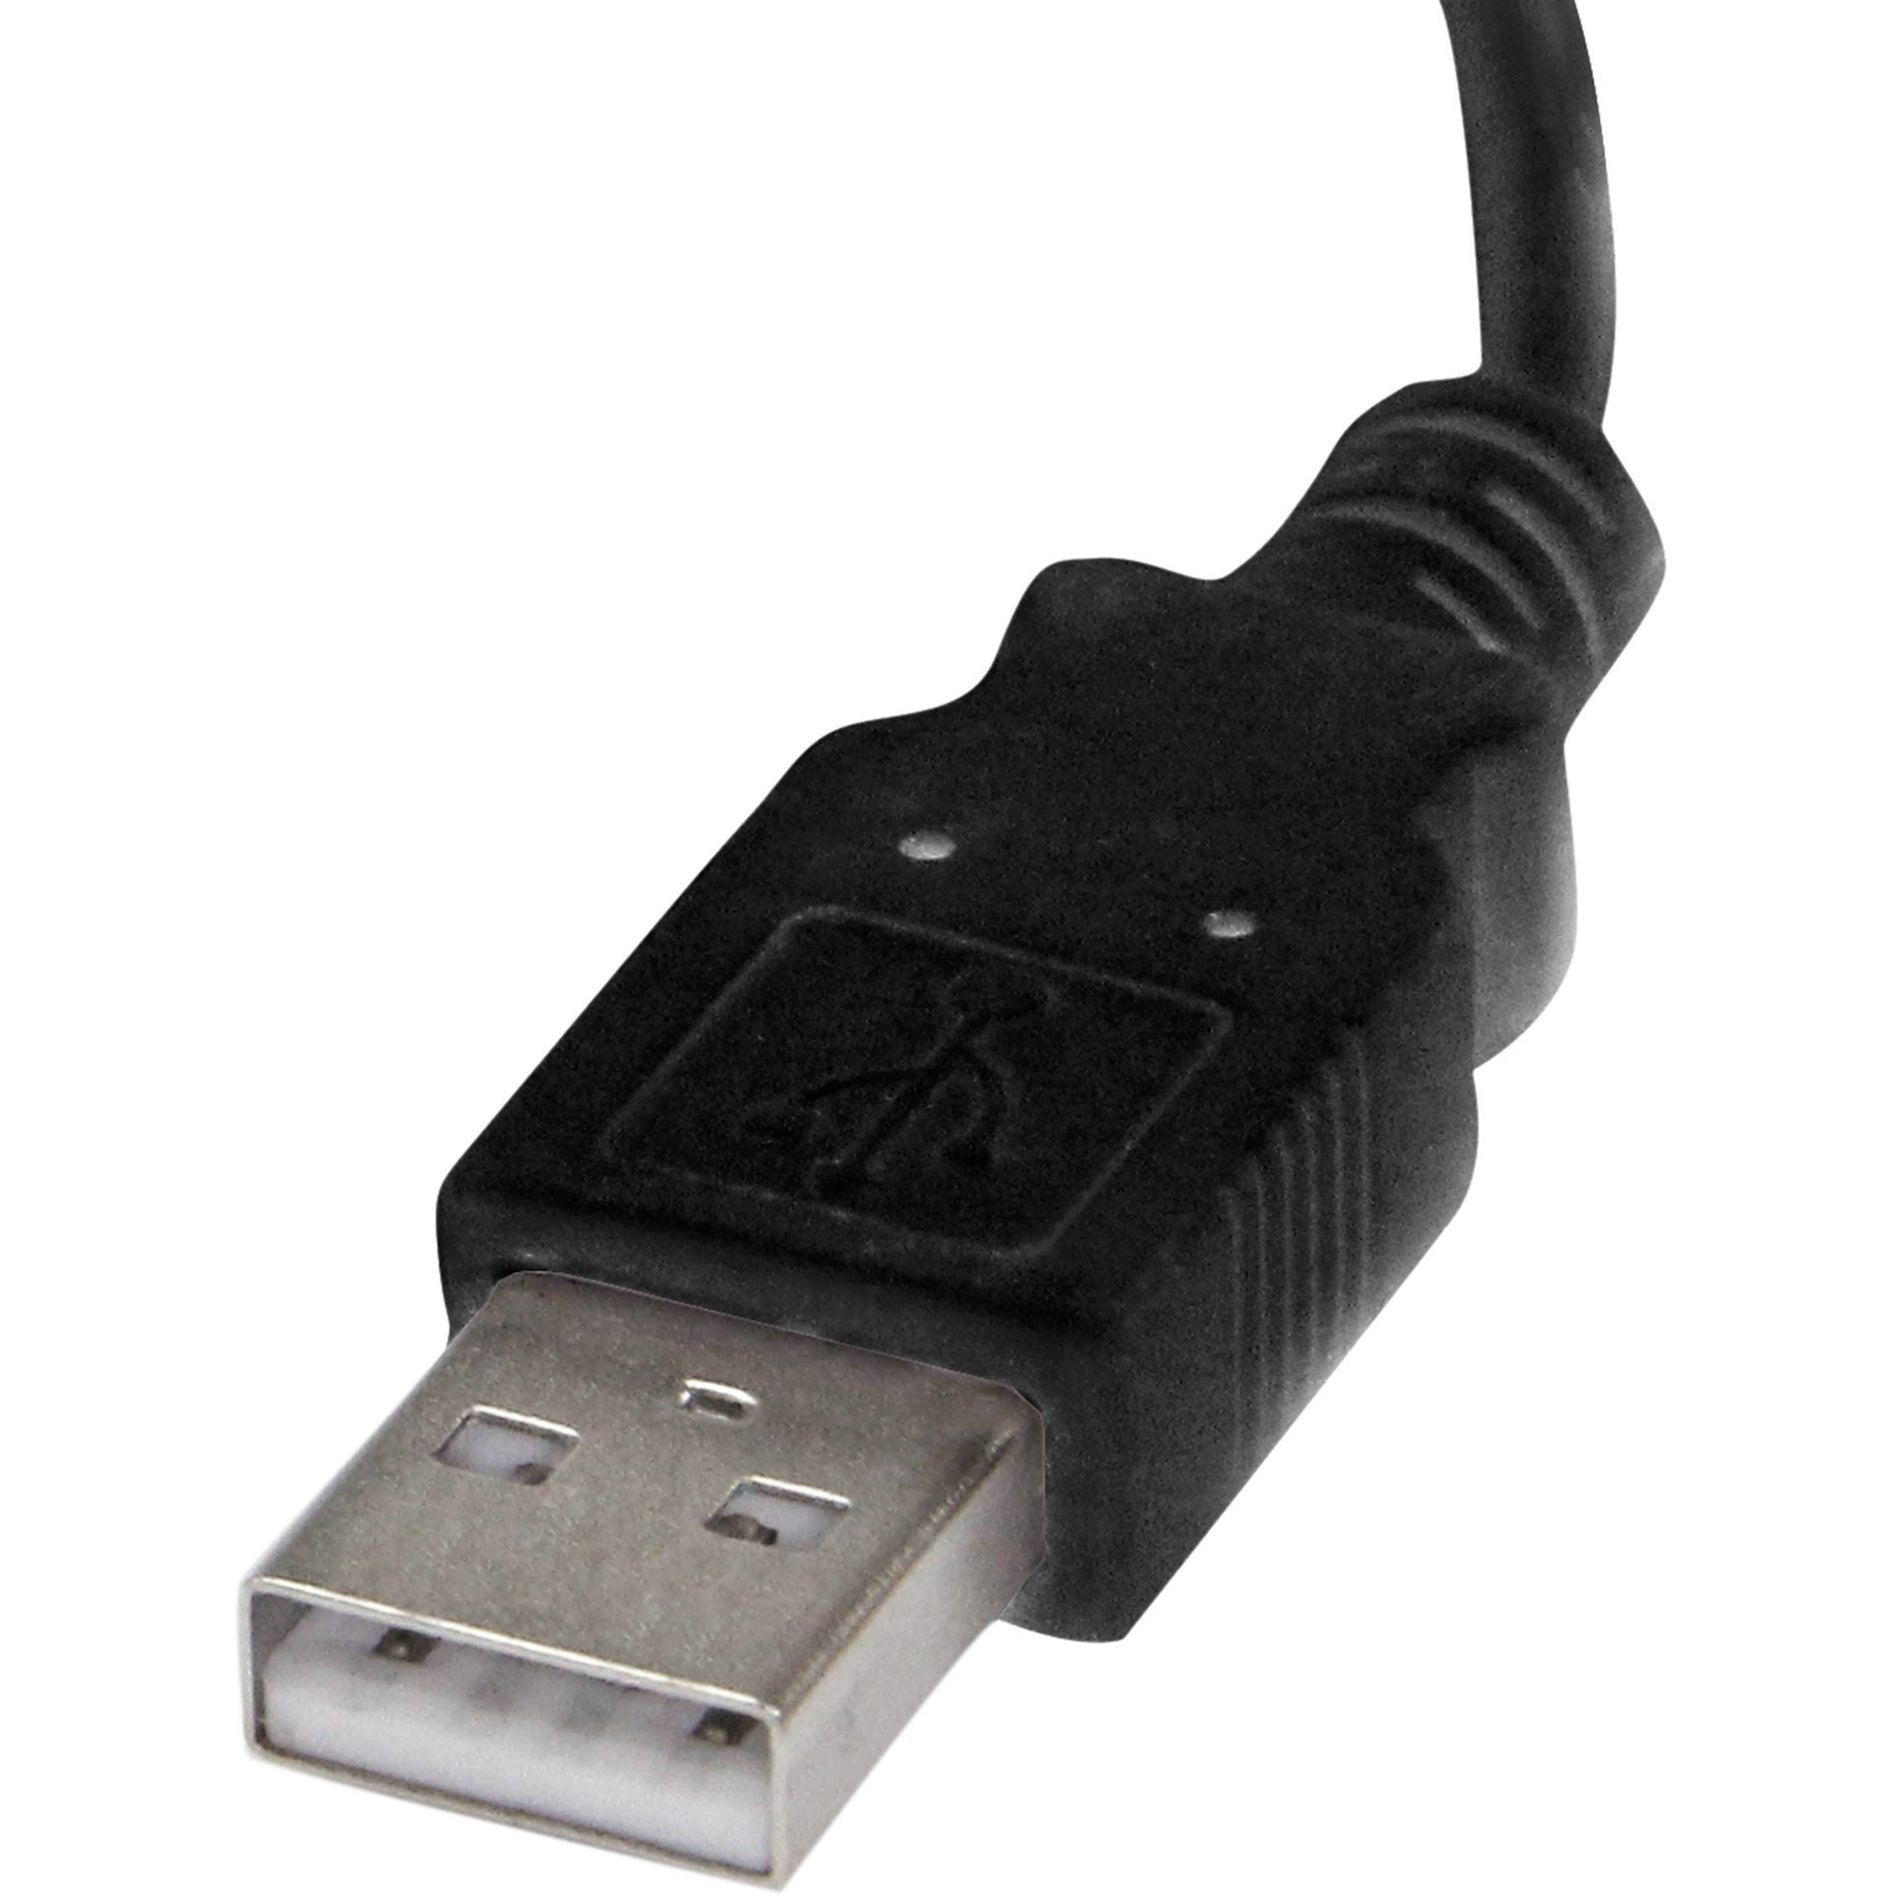 StarTech.com USB56KEMH2 56K USB Dial-Up and Fax Modem - V.92 - External, 2 Year Warranty, RoHS, REACH, WEEE